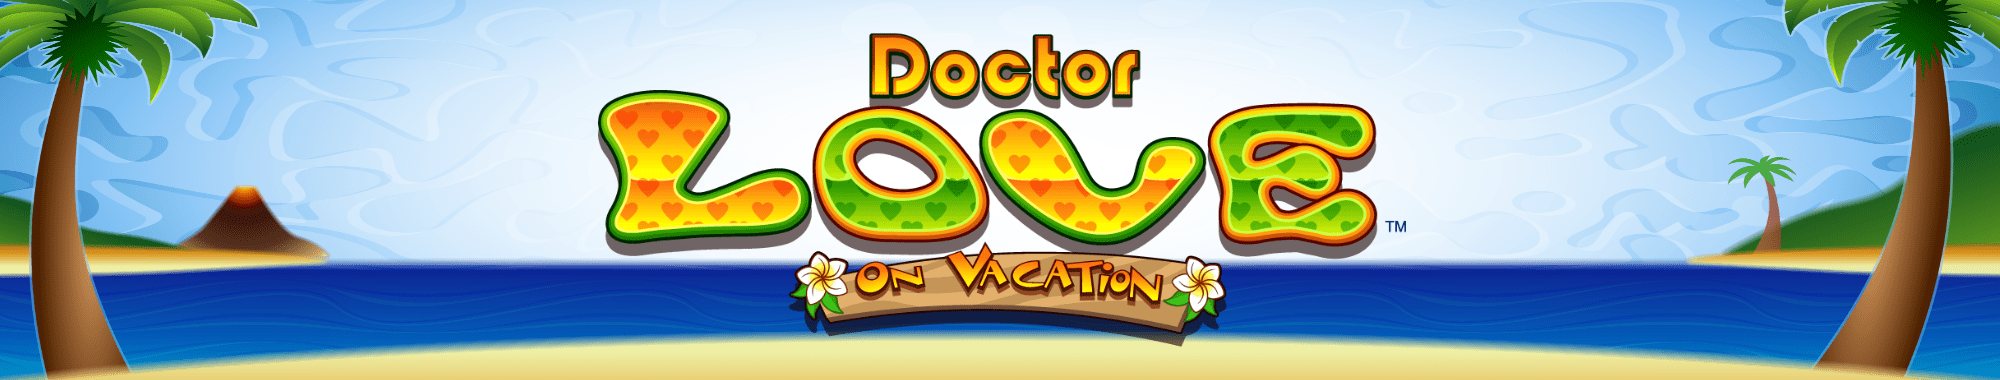 Dr Love Vacation Slots Game logo